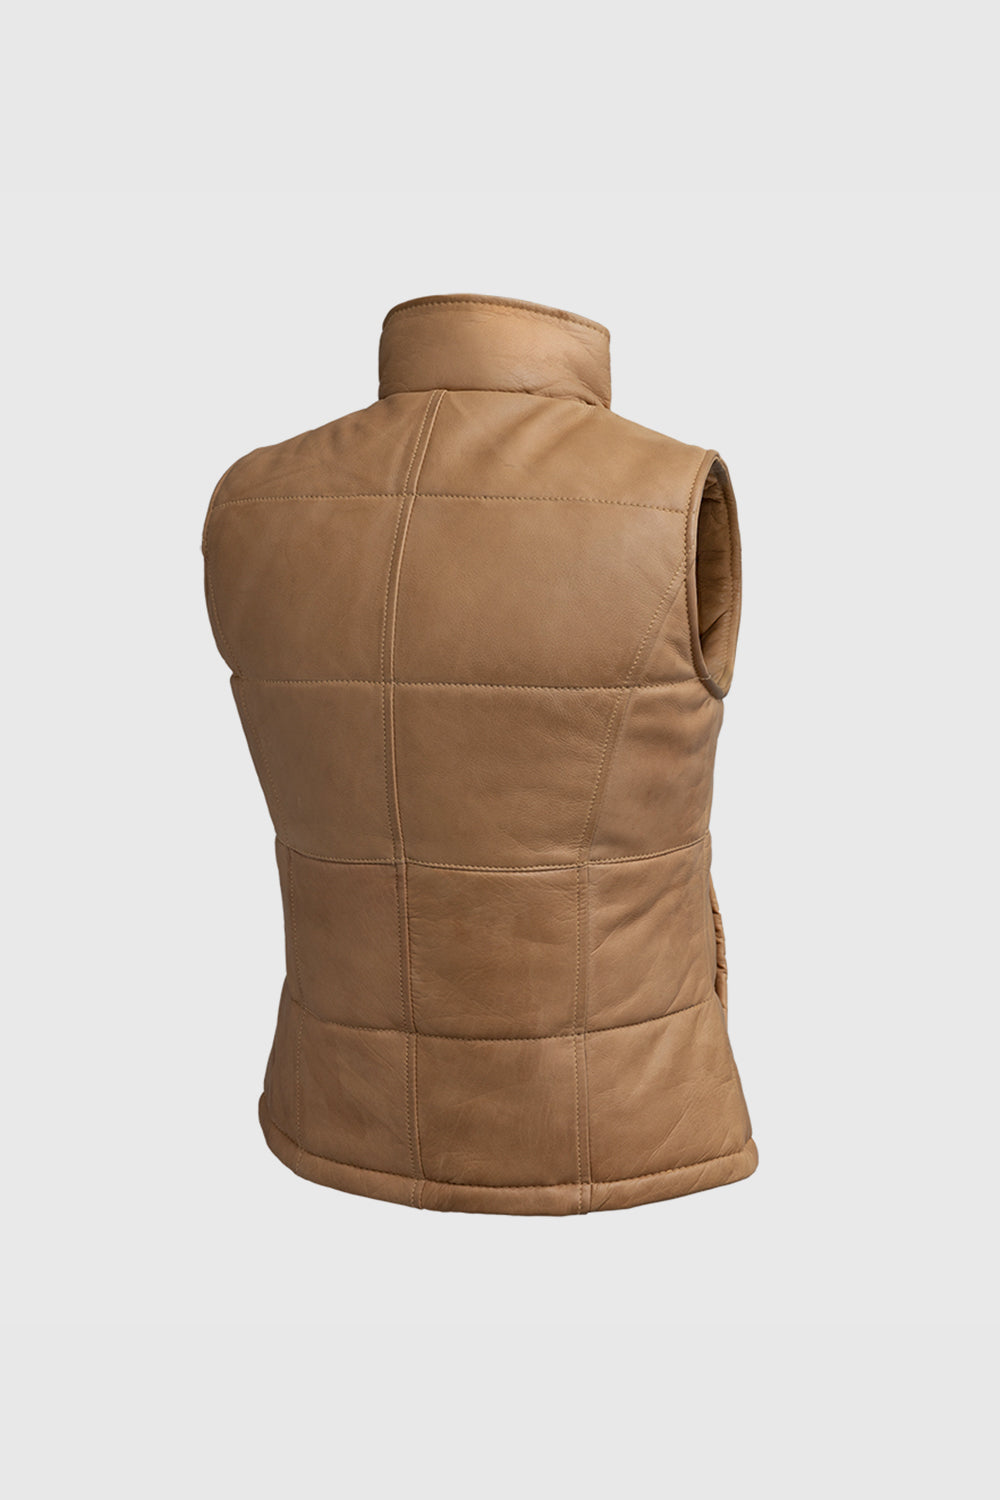 Aleeza Womens Fashion Leather Vest